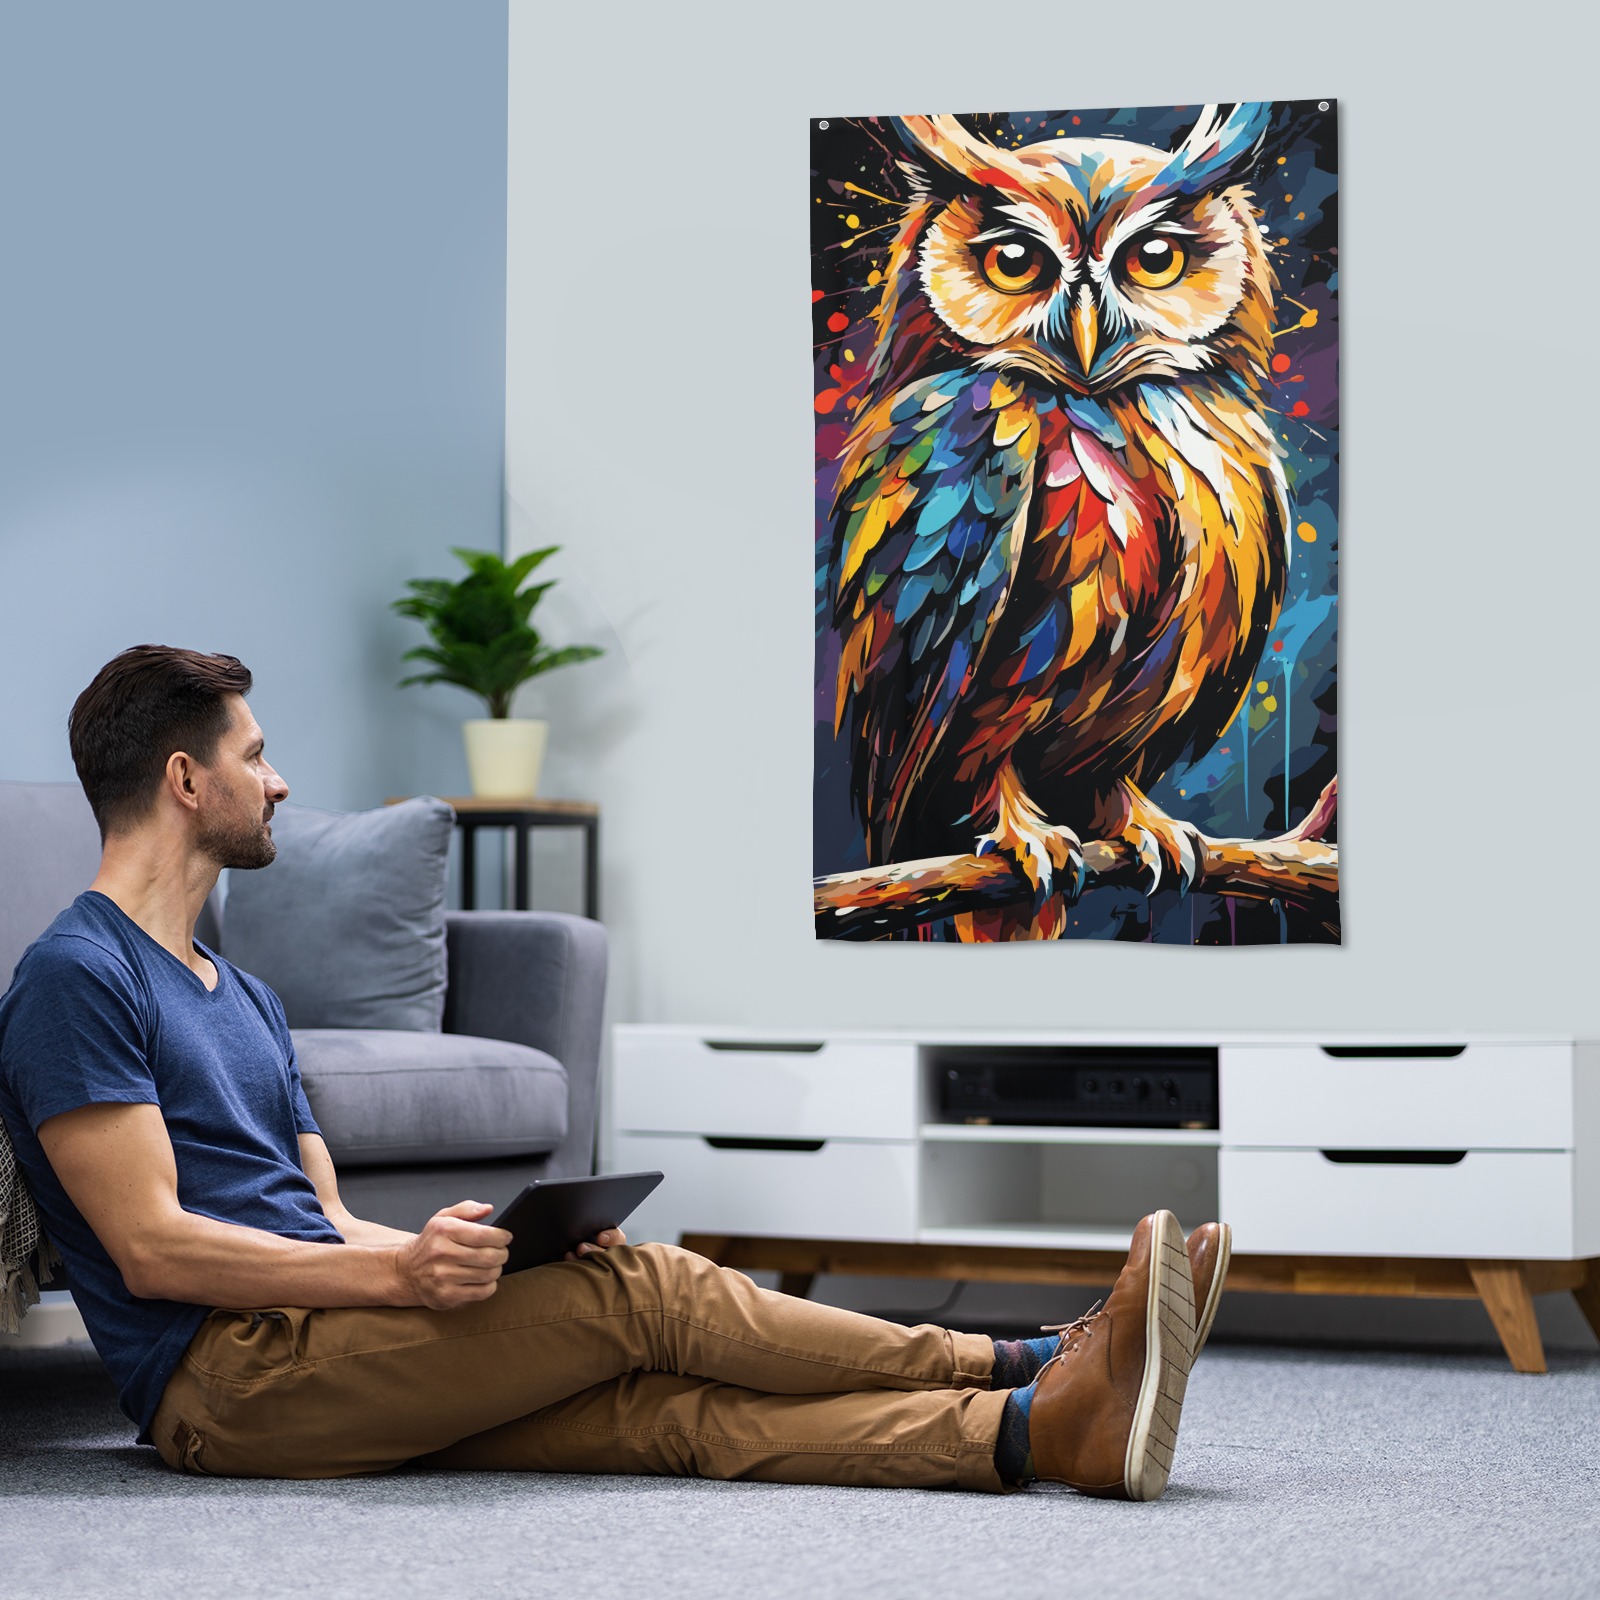 Cute owl bird. Cool, stylish colorful fantasy art House Flag 34.5"x56"